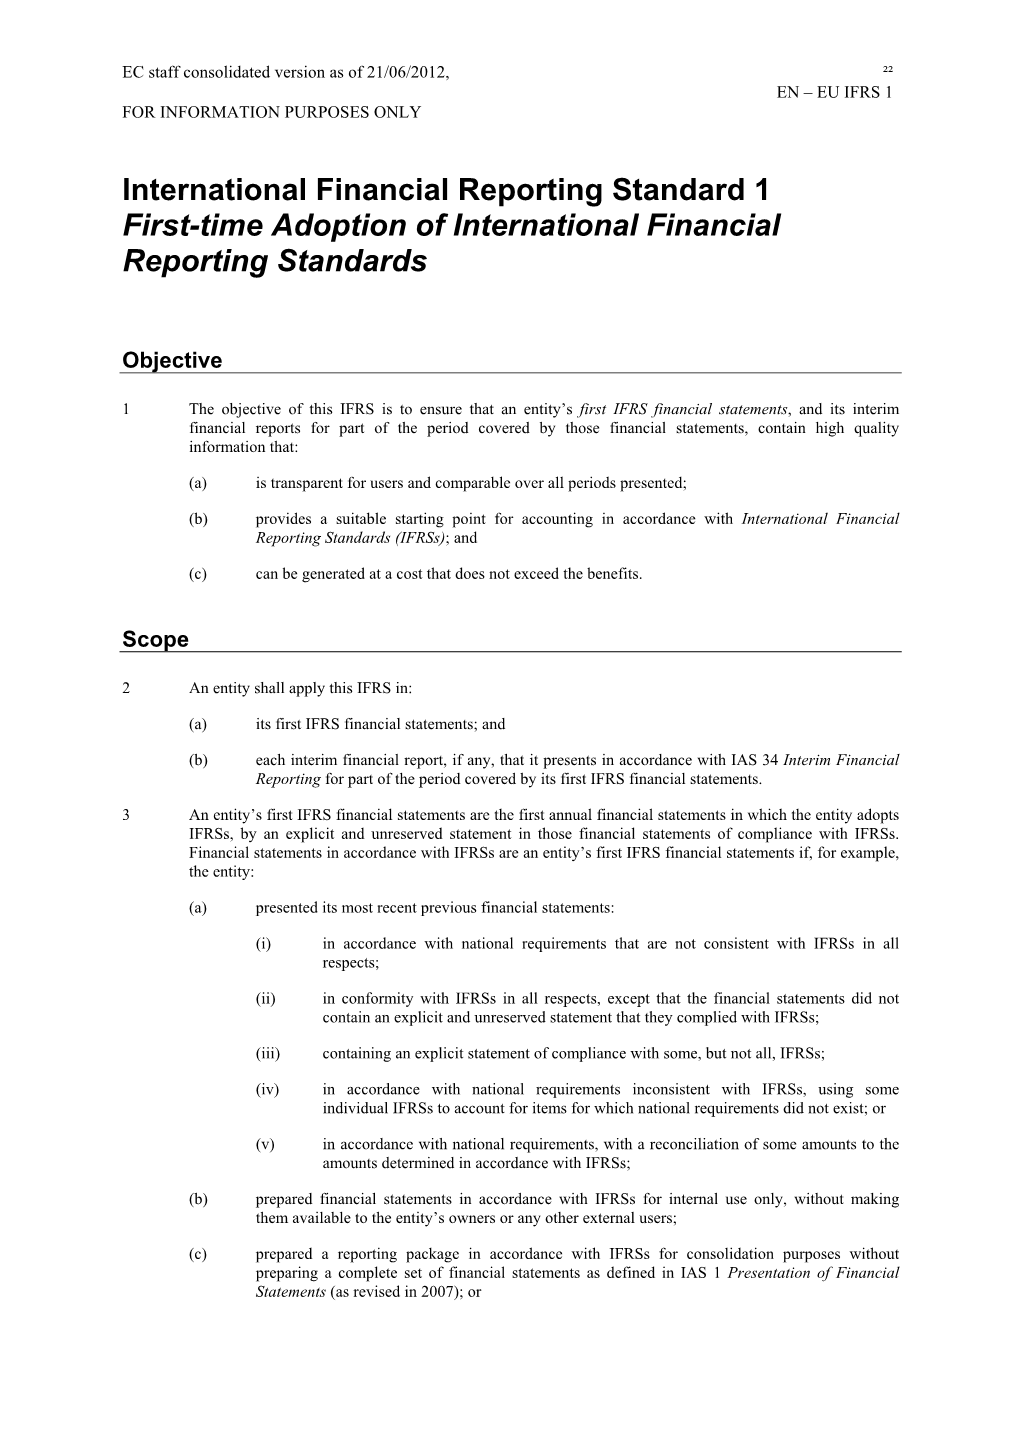 International Financial Reporting Standard 1 First-Time Adoption of International Financial Reporting Standards